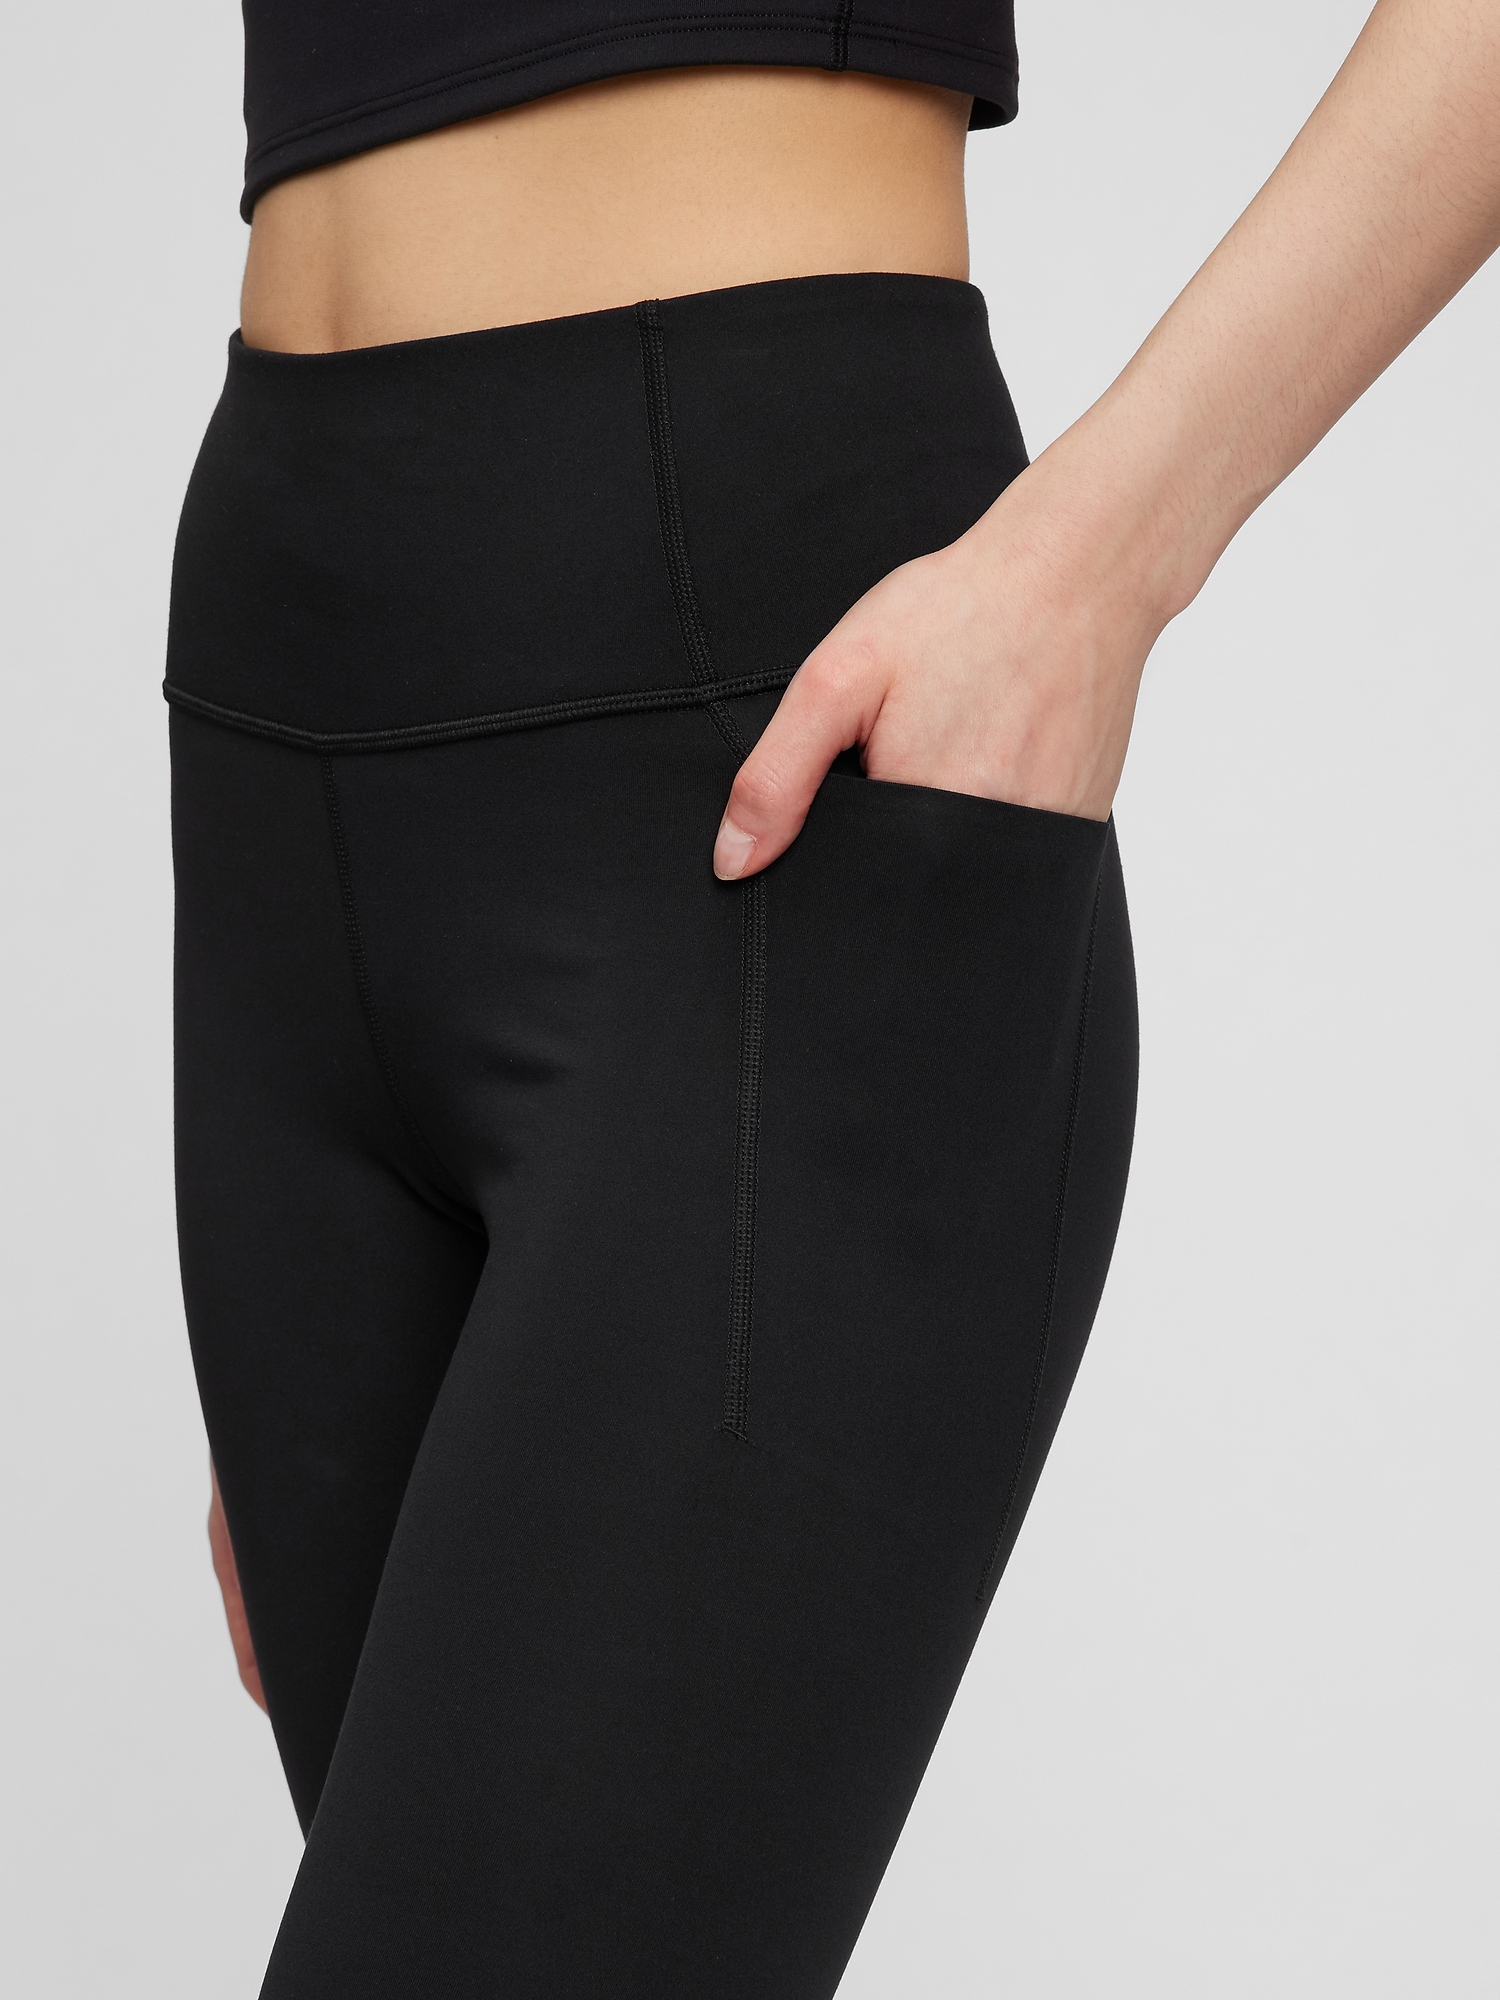 Buy Keepfit Cotton Spandex Slim fit Ankle Length Pocket Leggings for Women  & Girls/Activewear Tights for Women with Two Pockets/Yoga Leggings for Women  White at